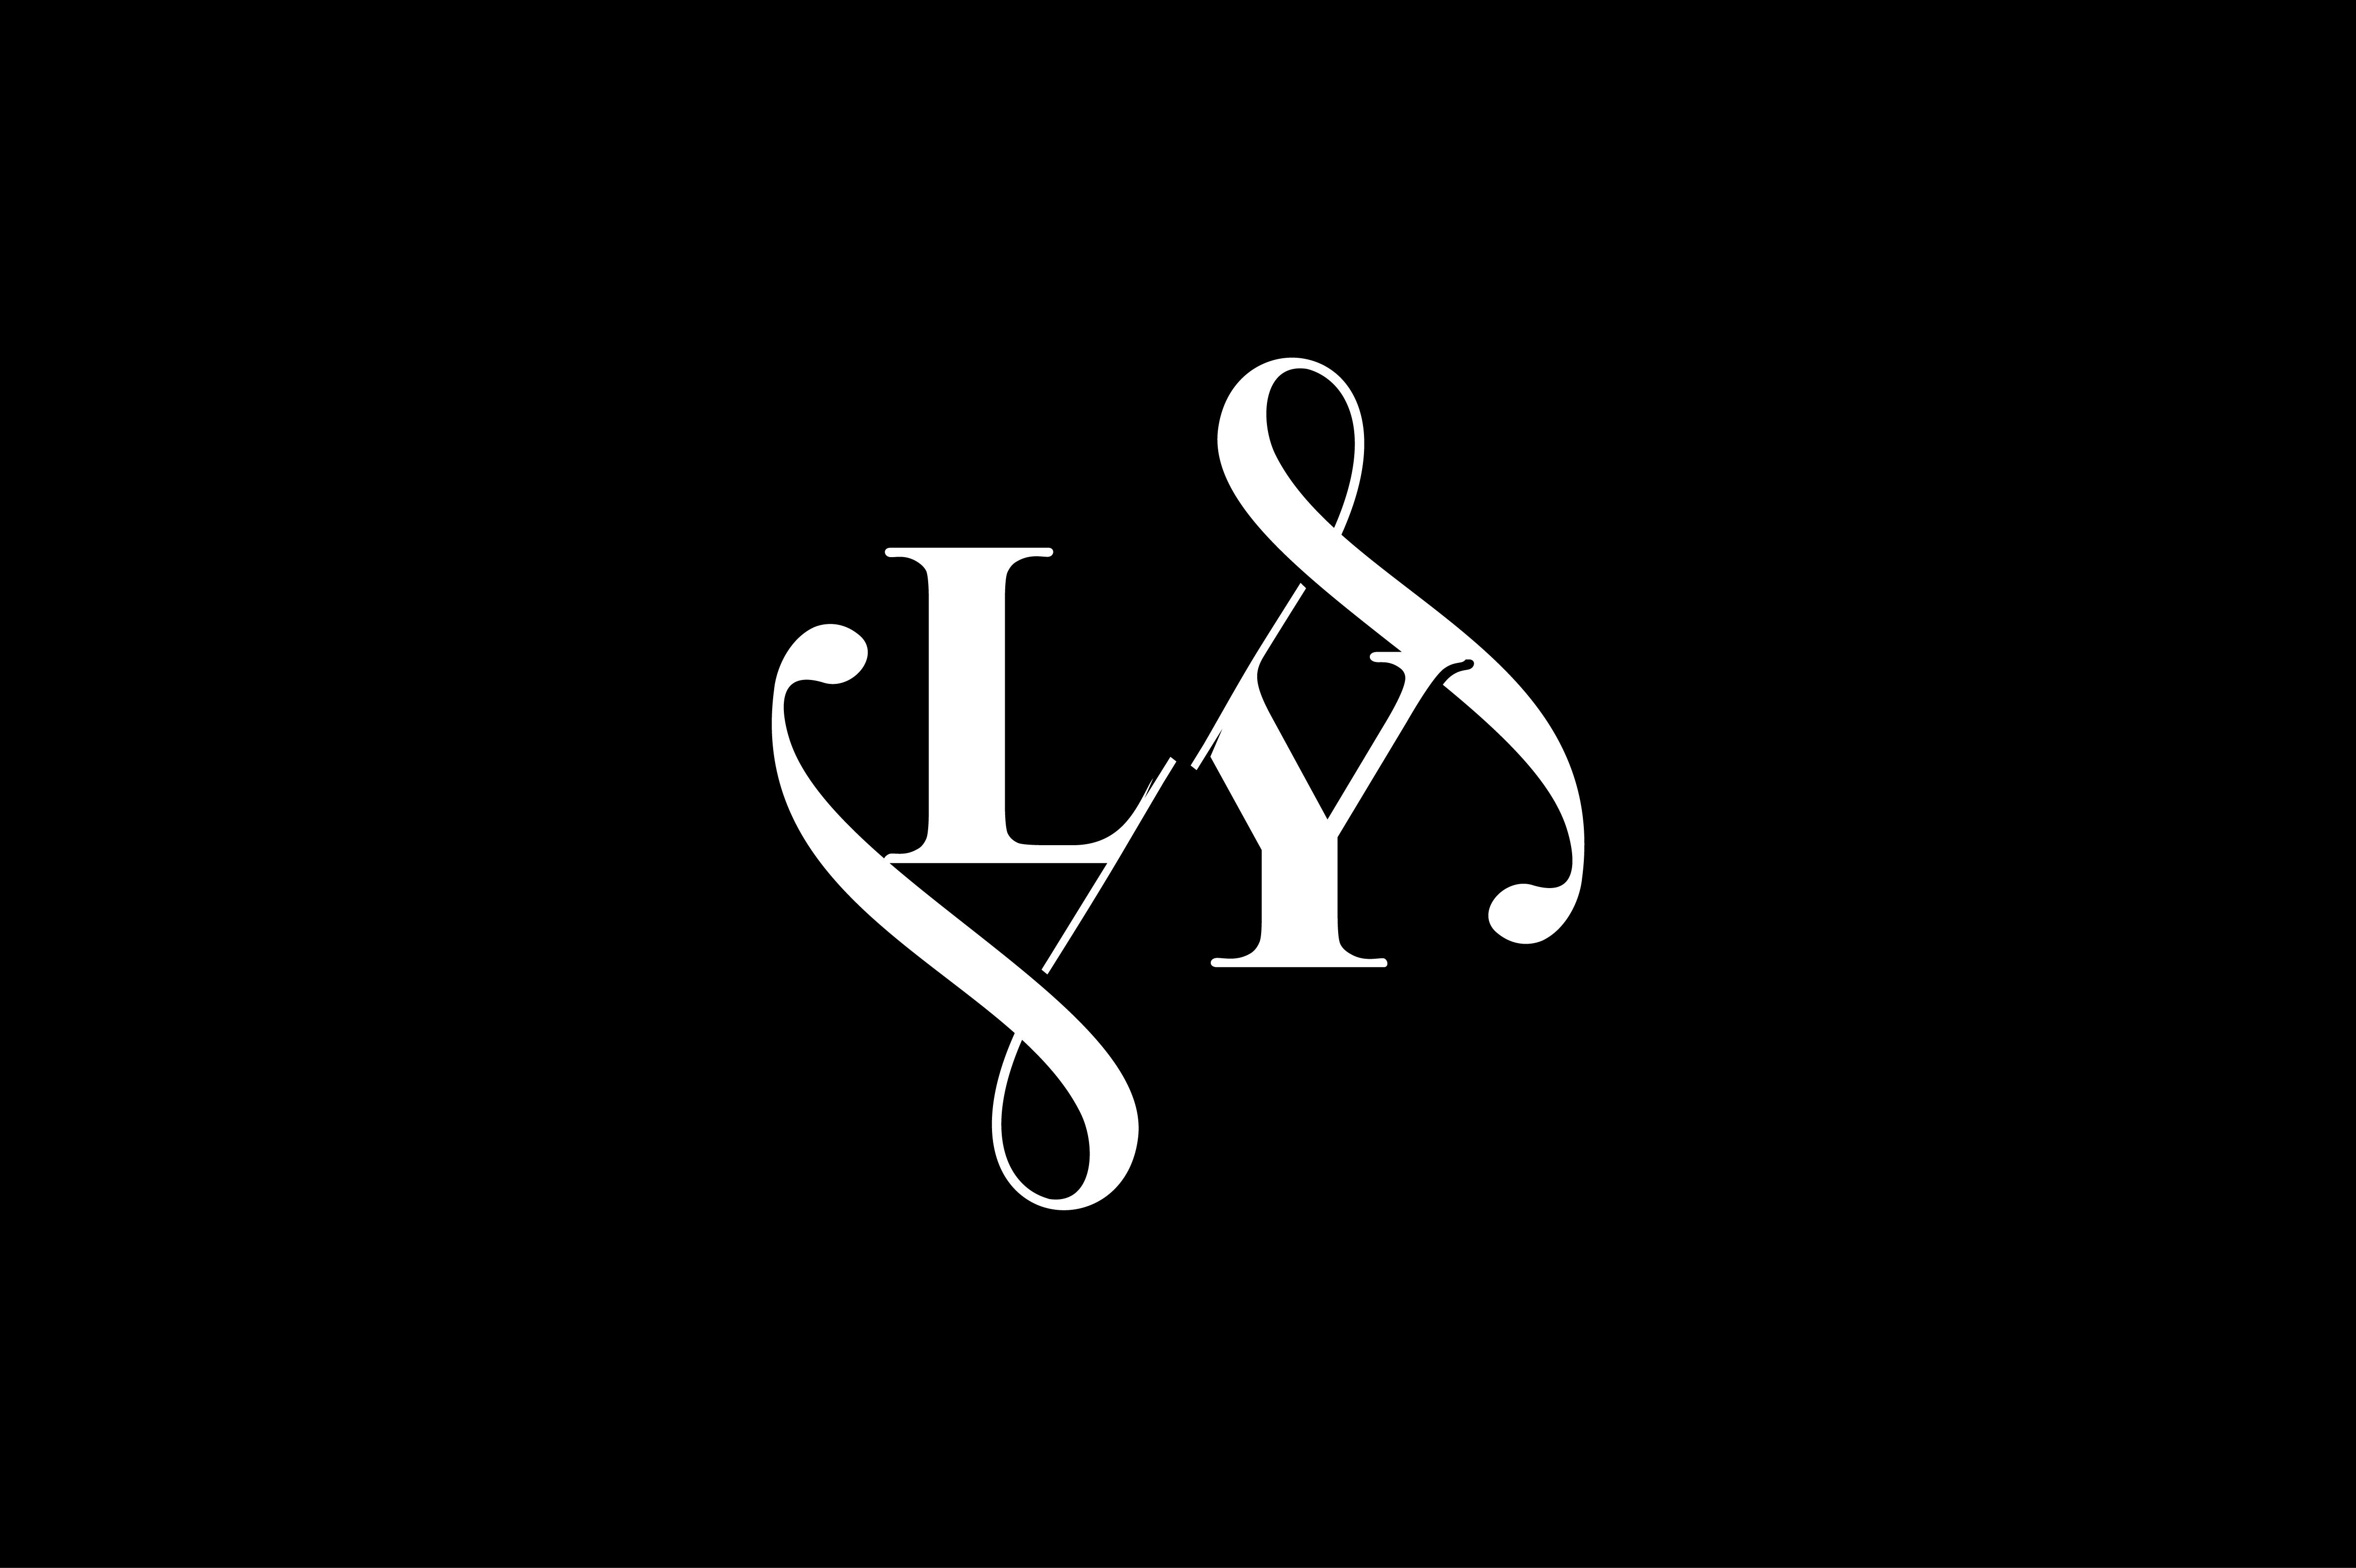 LY Monogram Logo V5 By Vectorseller